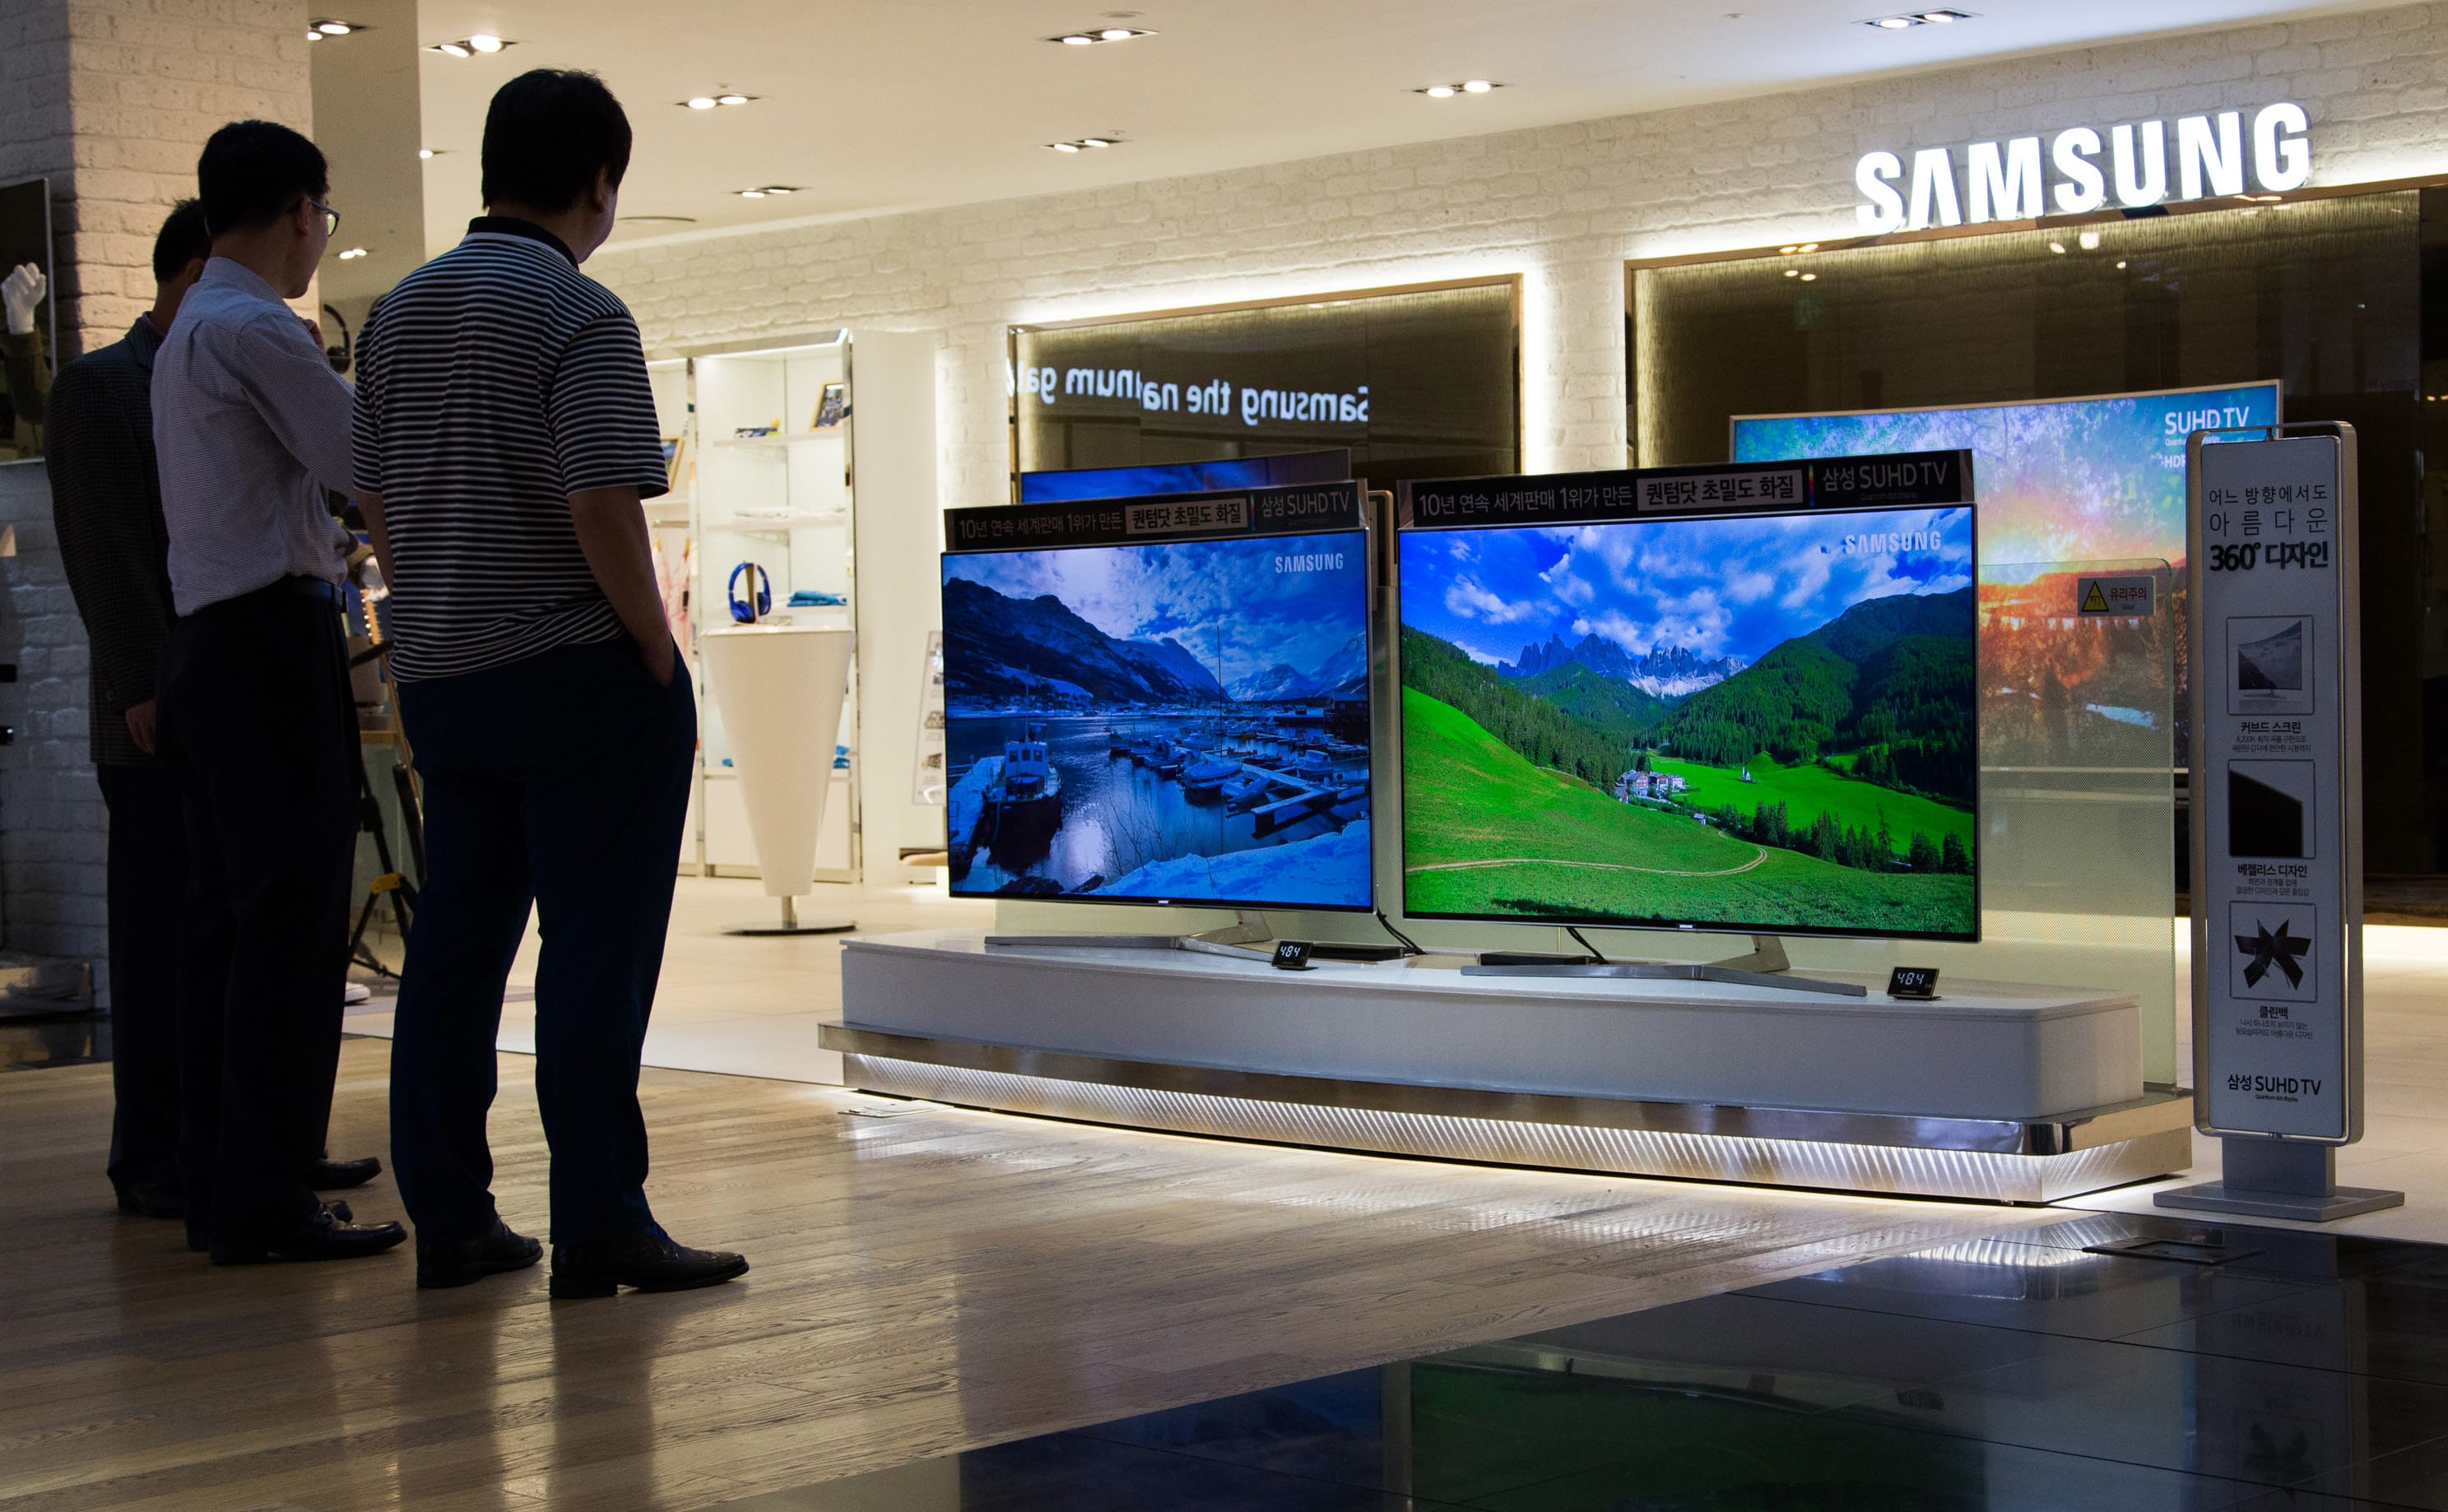 Subscriptions on Samsung Smart TVs